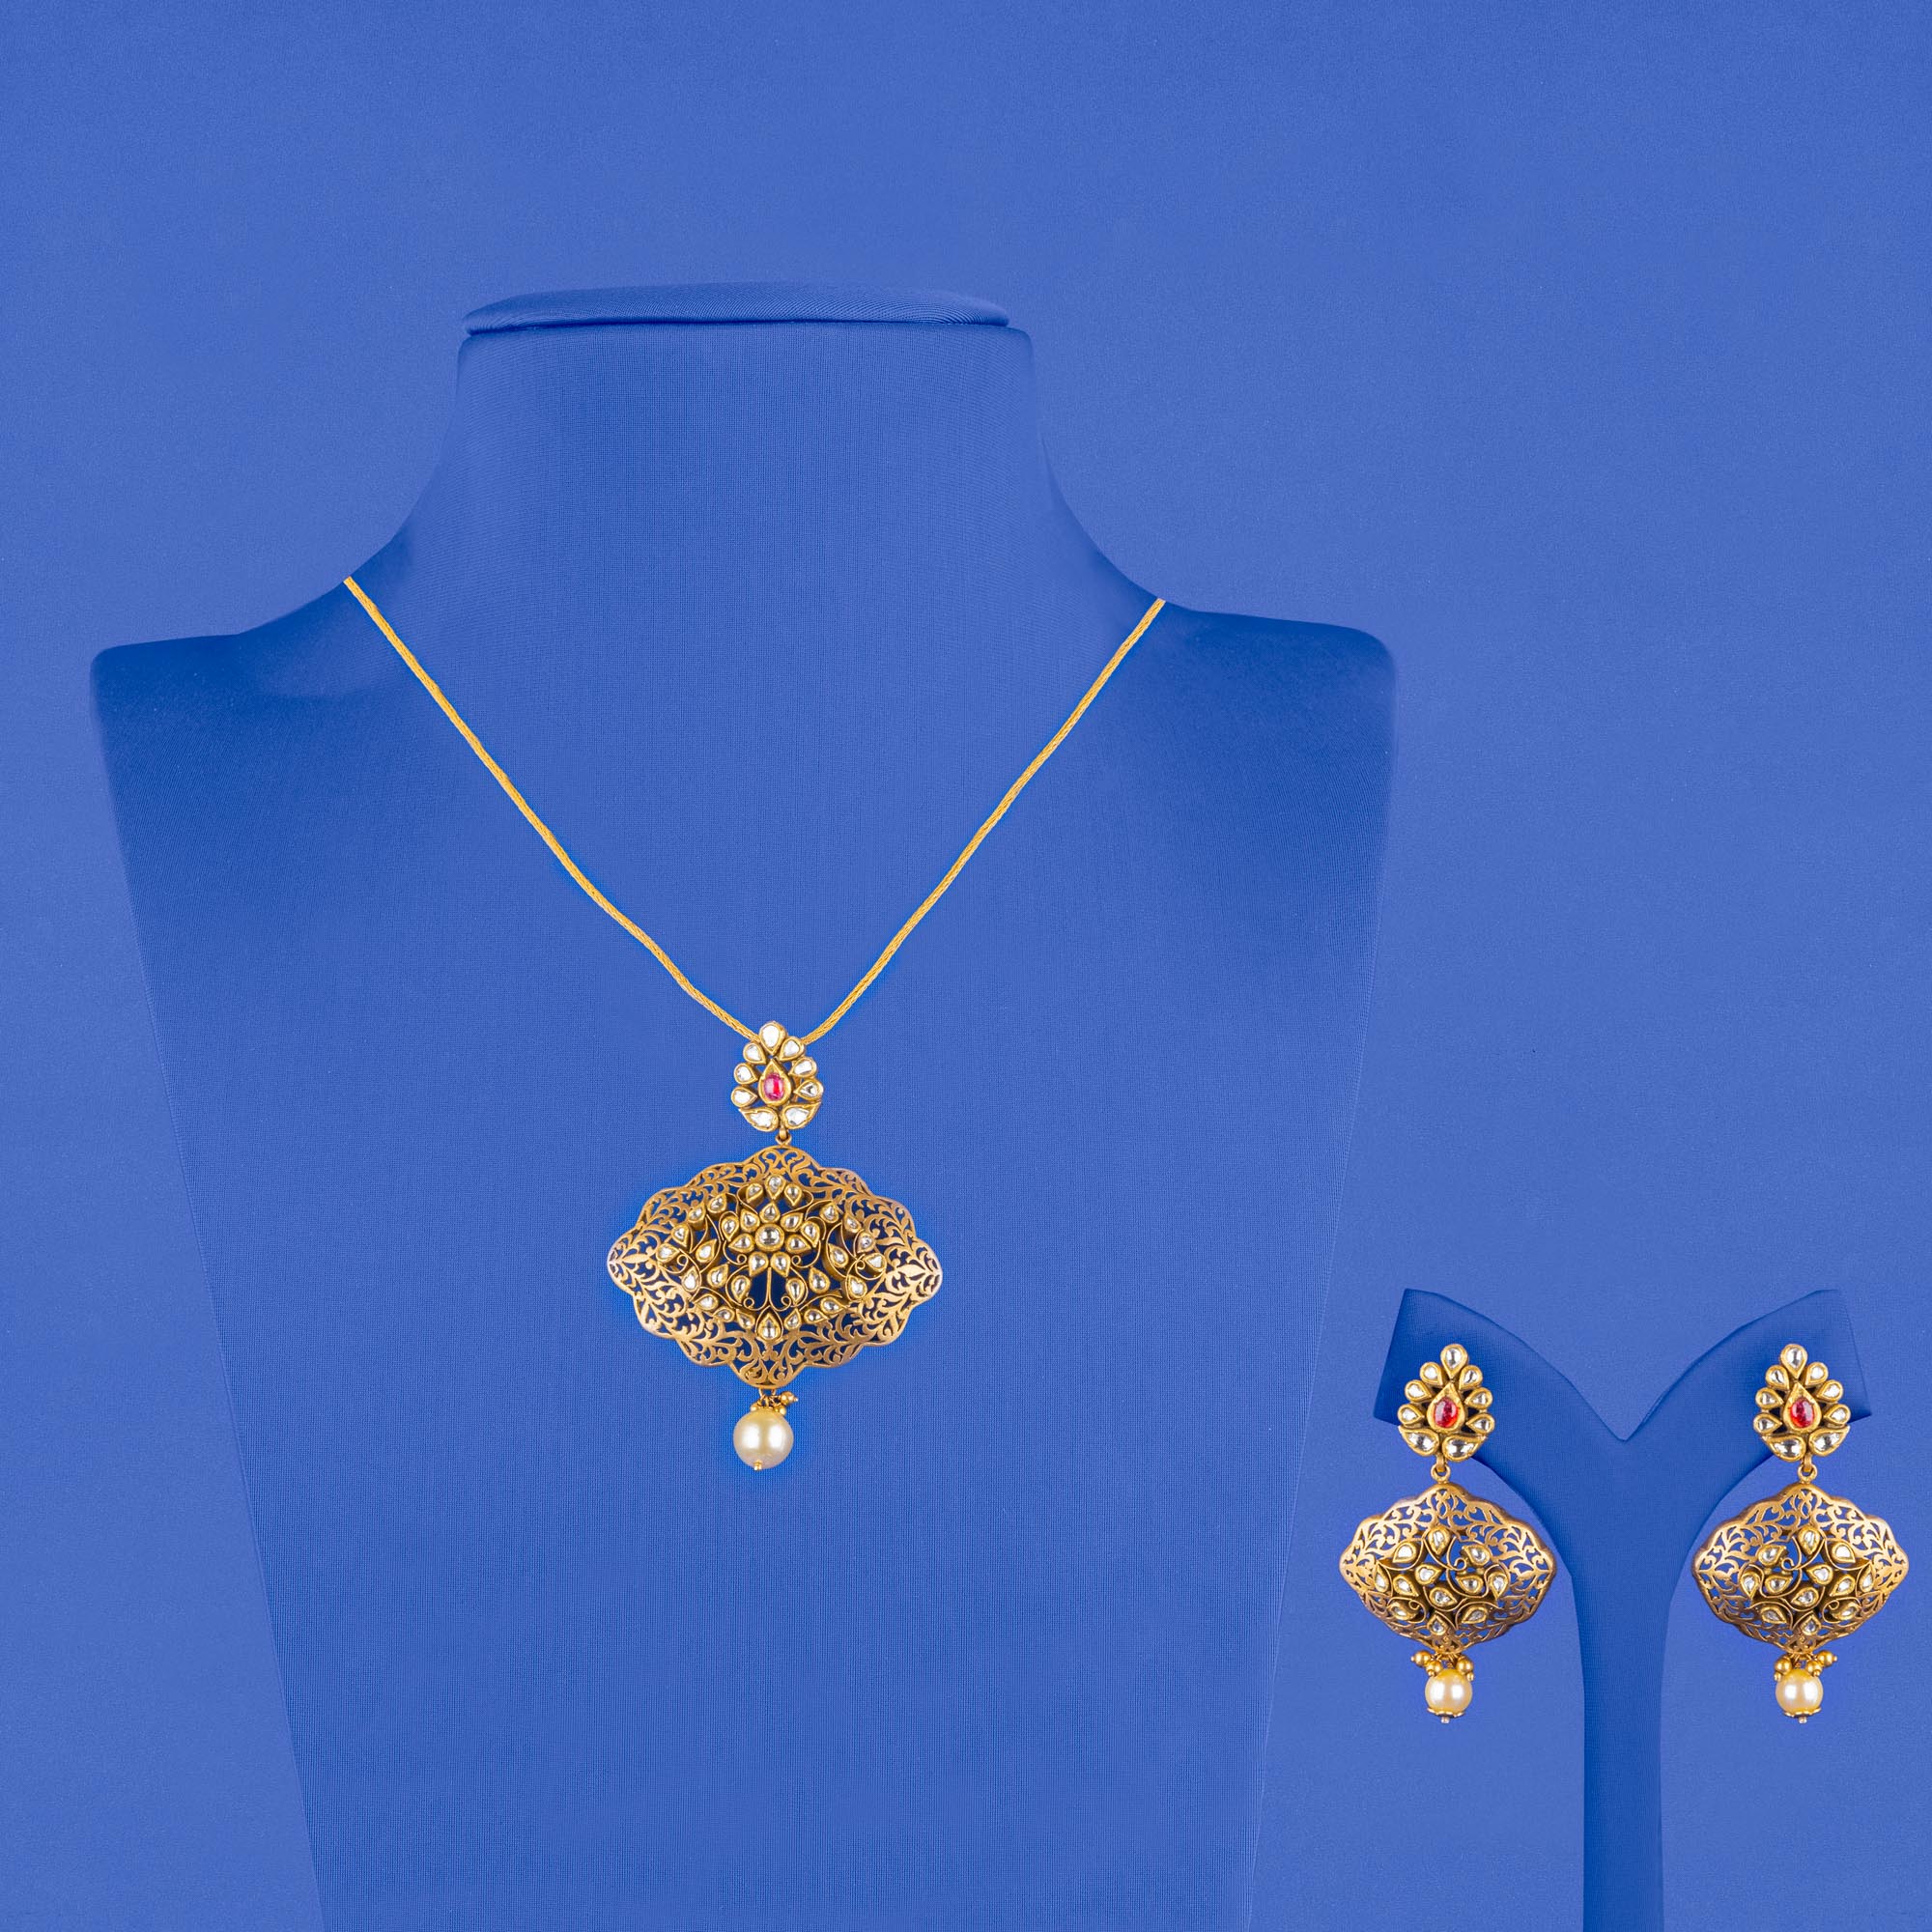 Handmade 22k Gold 'Antique' Pendant and earrings set with Polki Diamonds